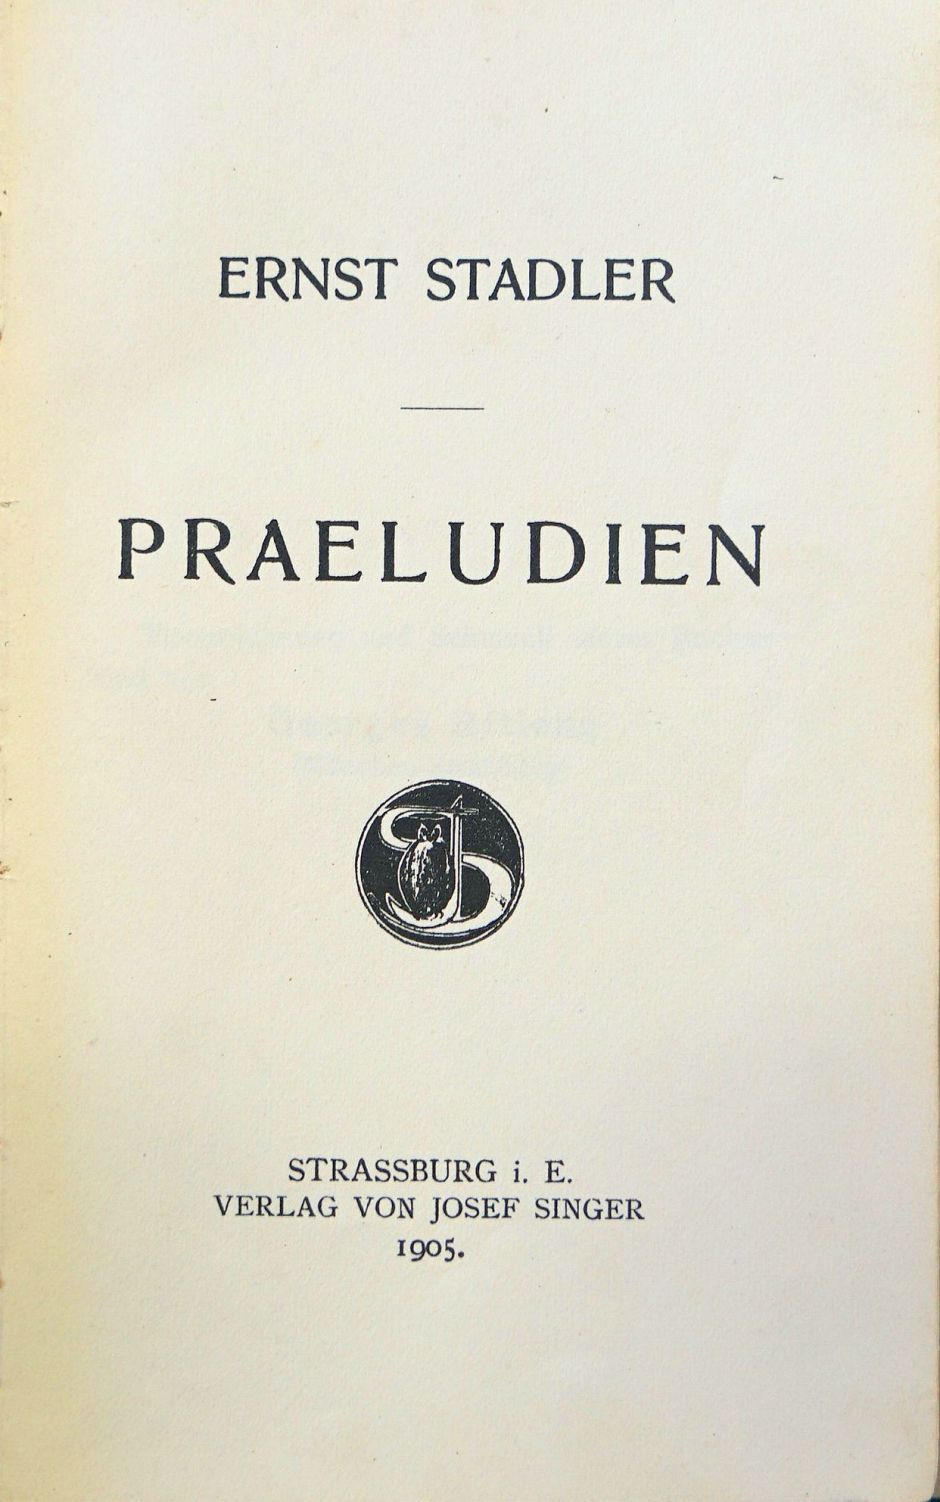 Lot 3428, Auction  115, Stadler, Ernst, Praeludien